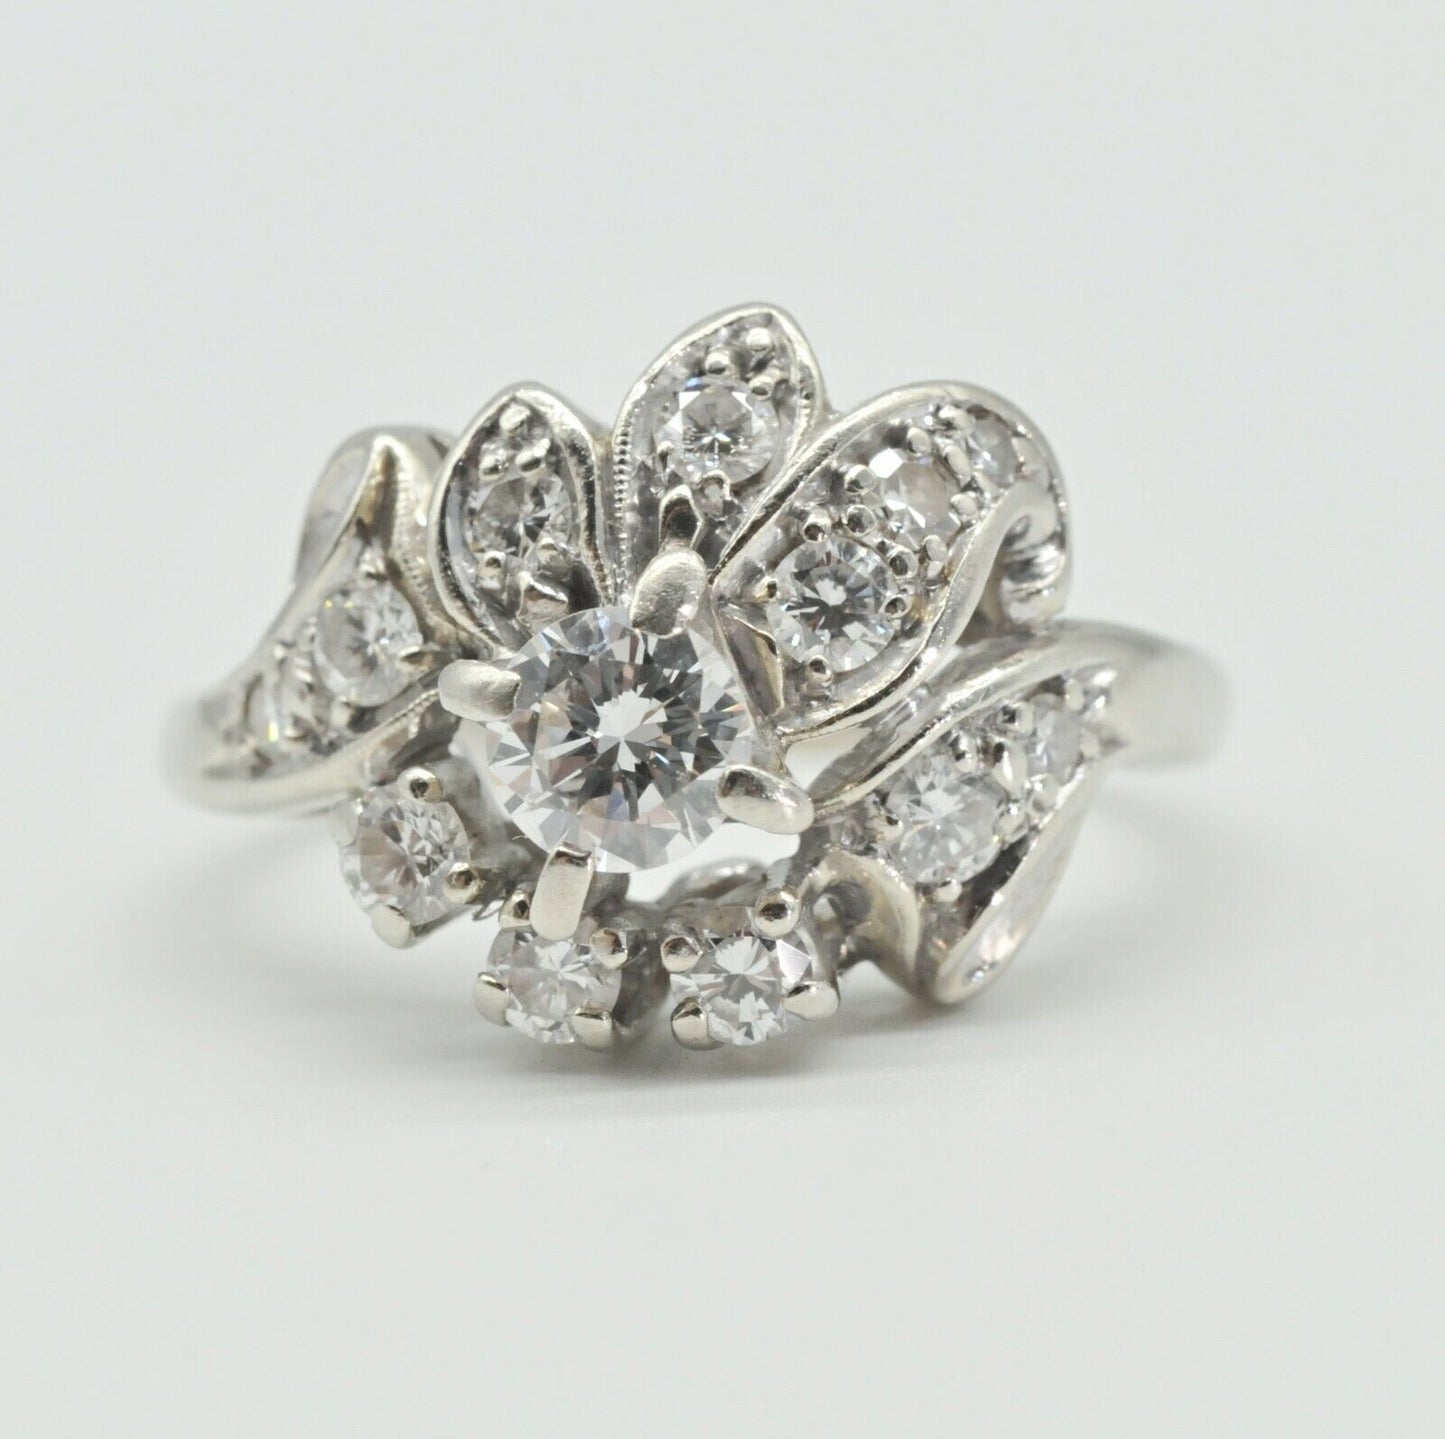 Vintage Cluster Diamond Ring in 14k White Gold 6us